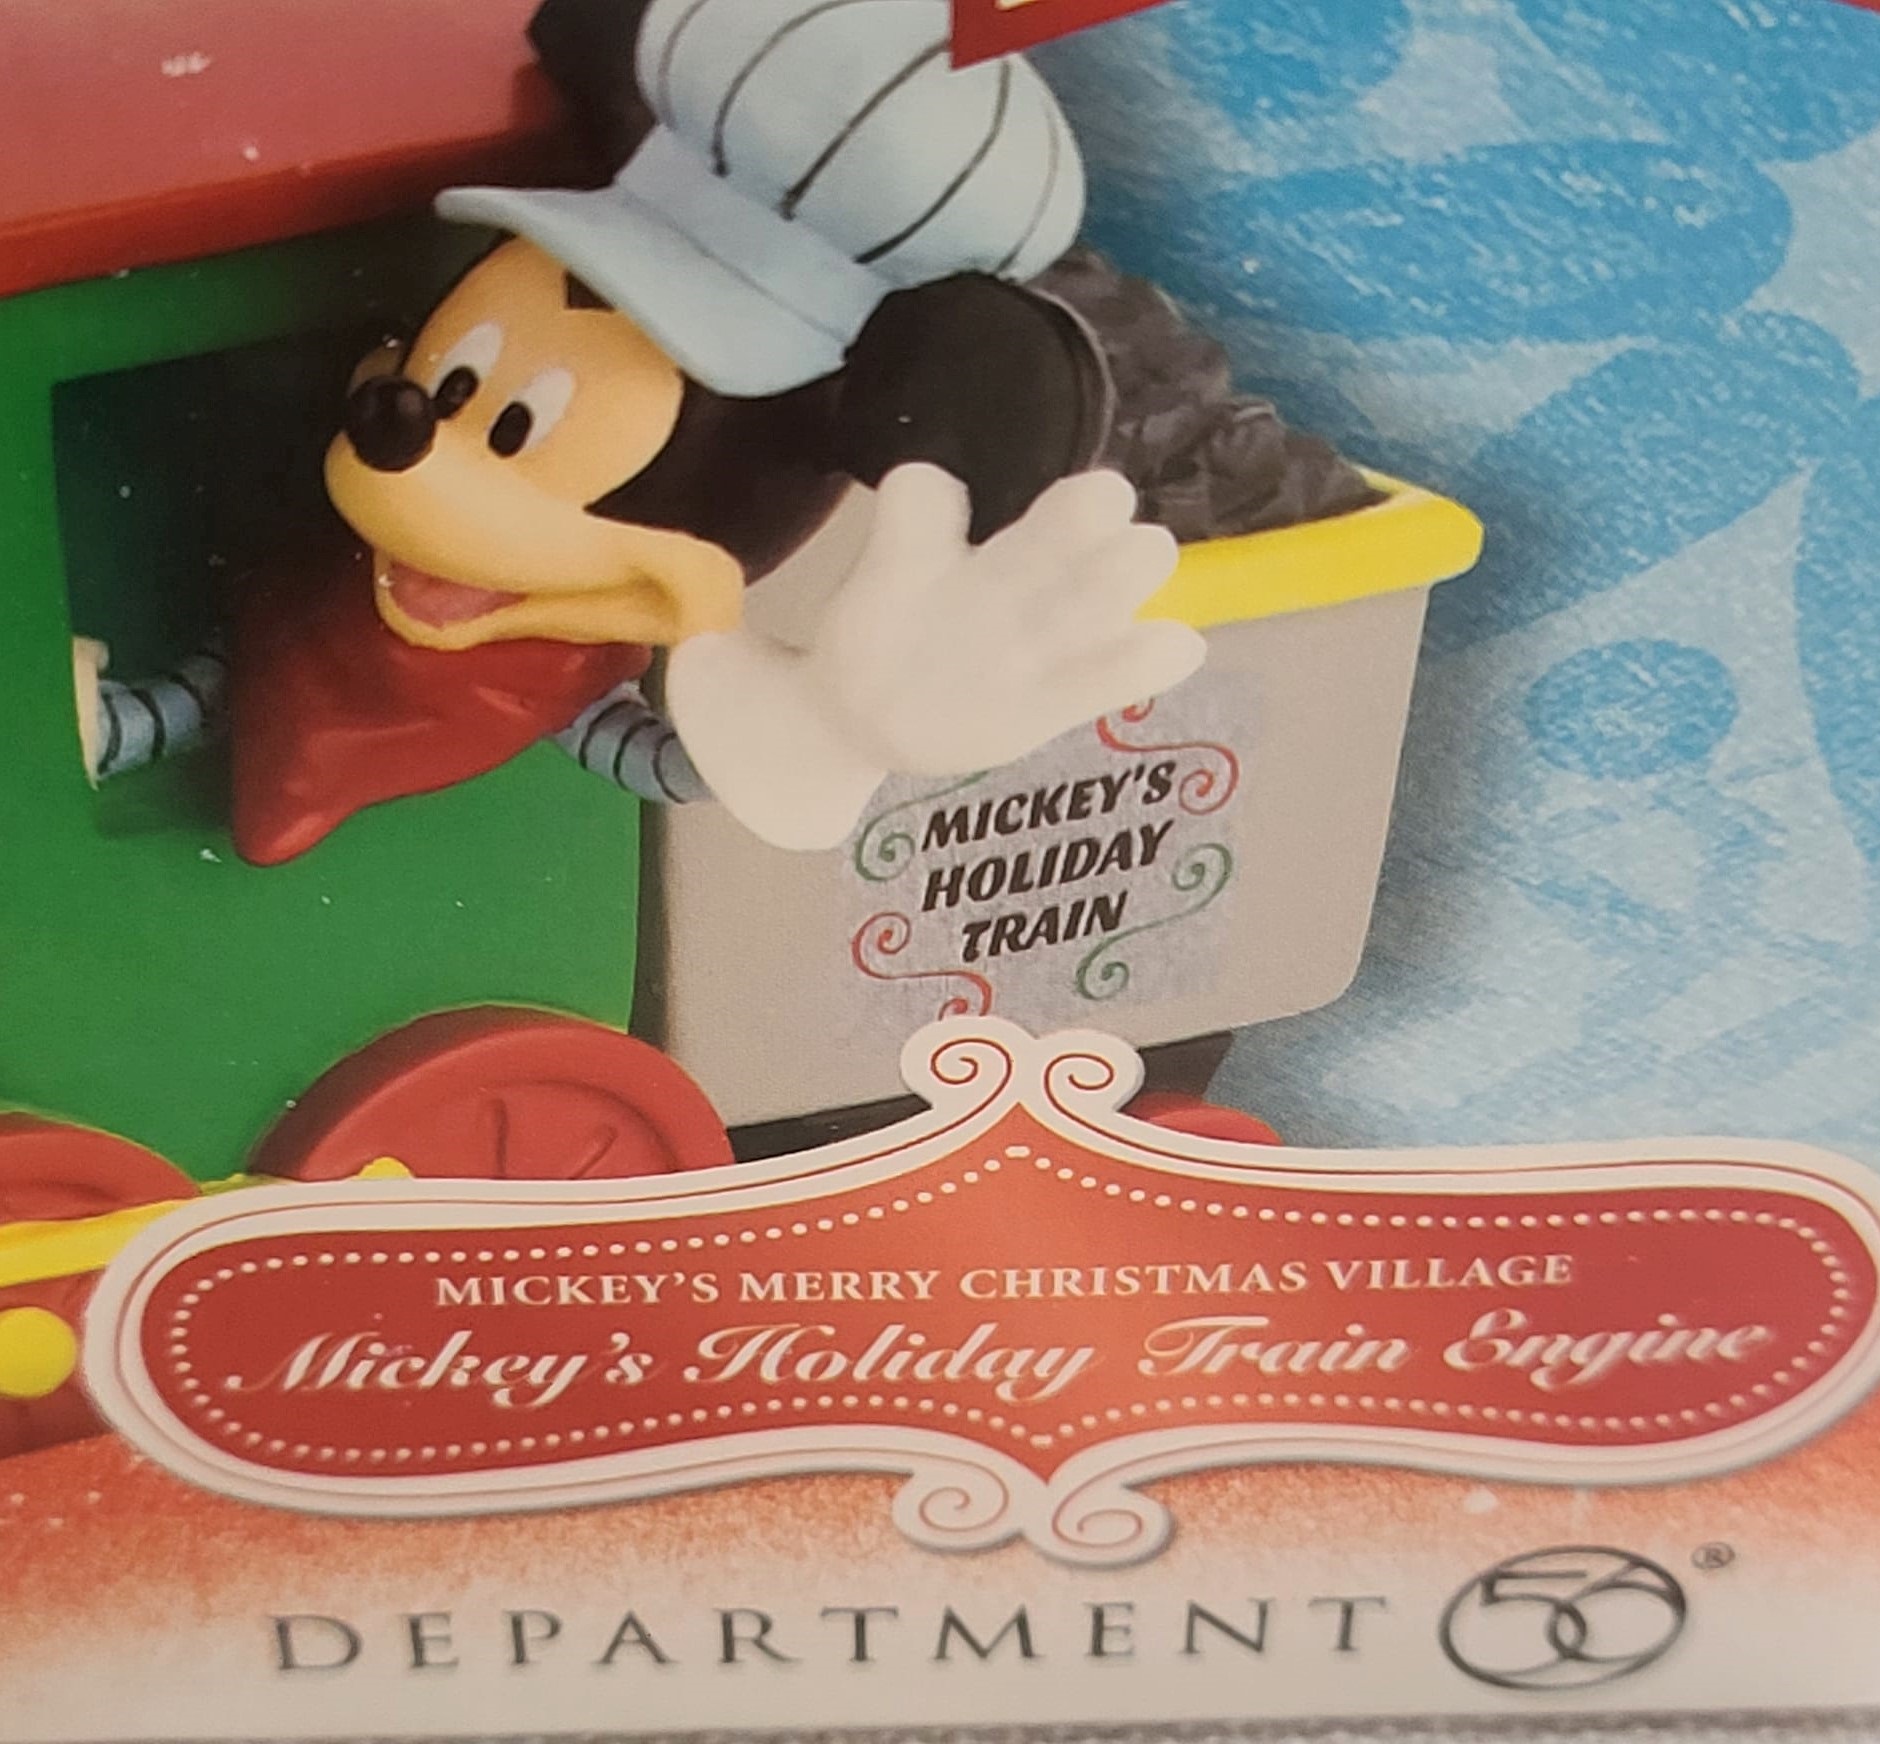 Department 56 Disney Village Mickey's Holiday Train